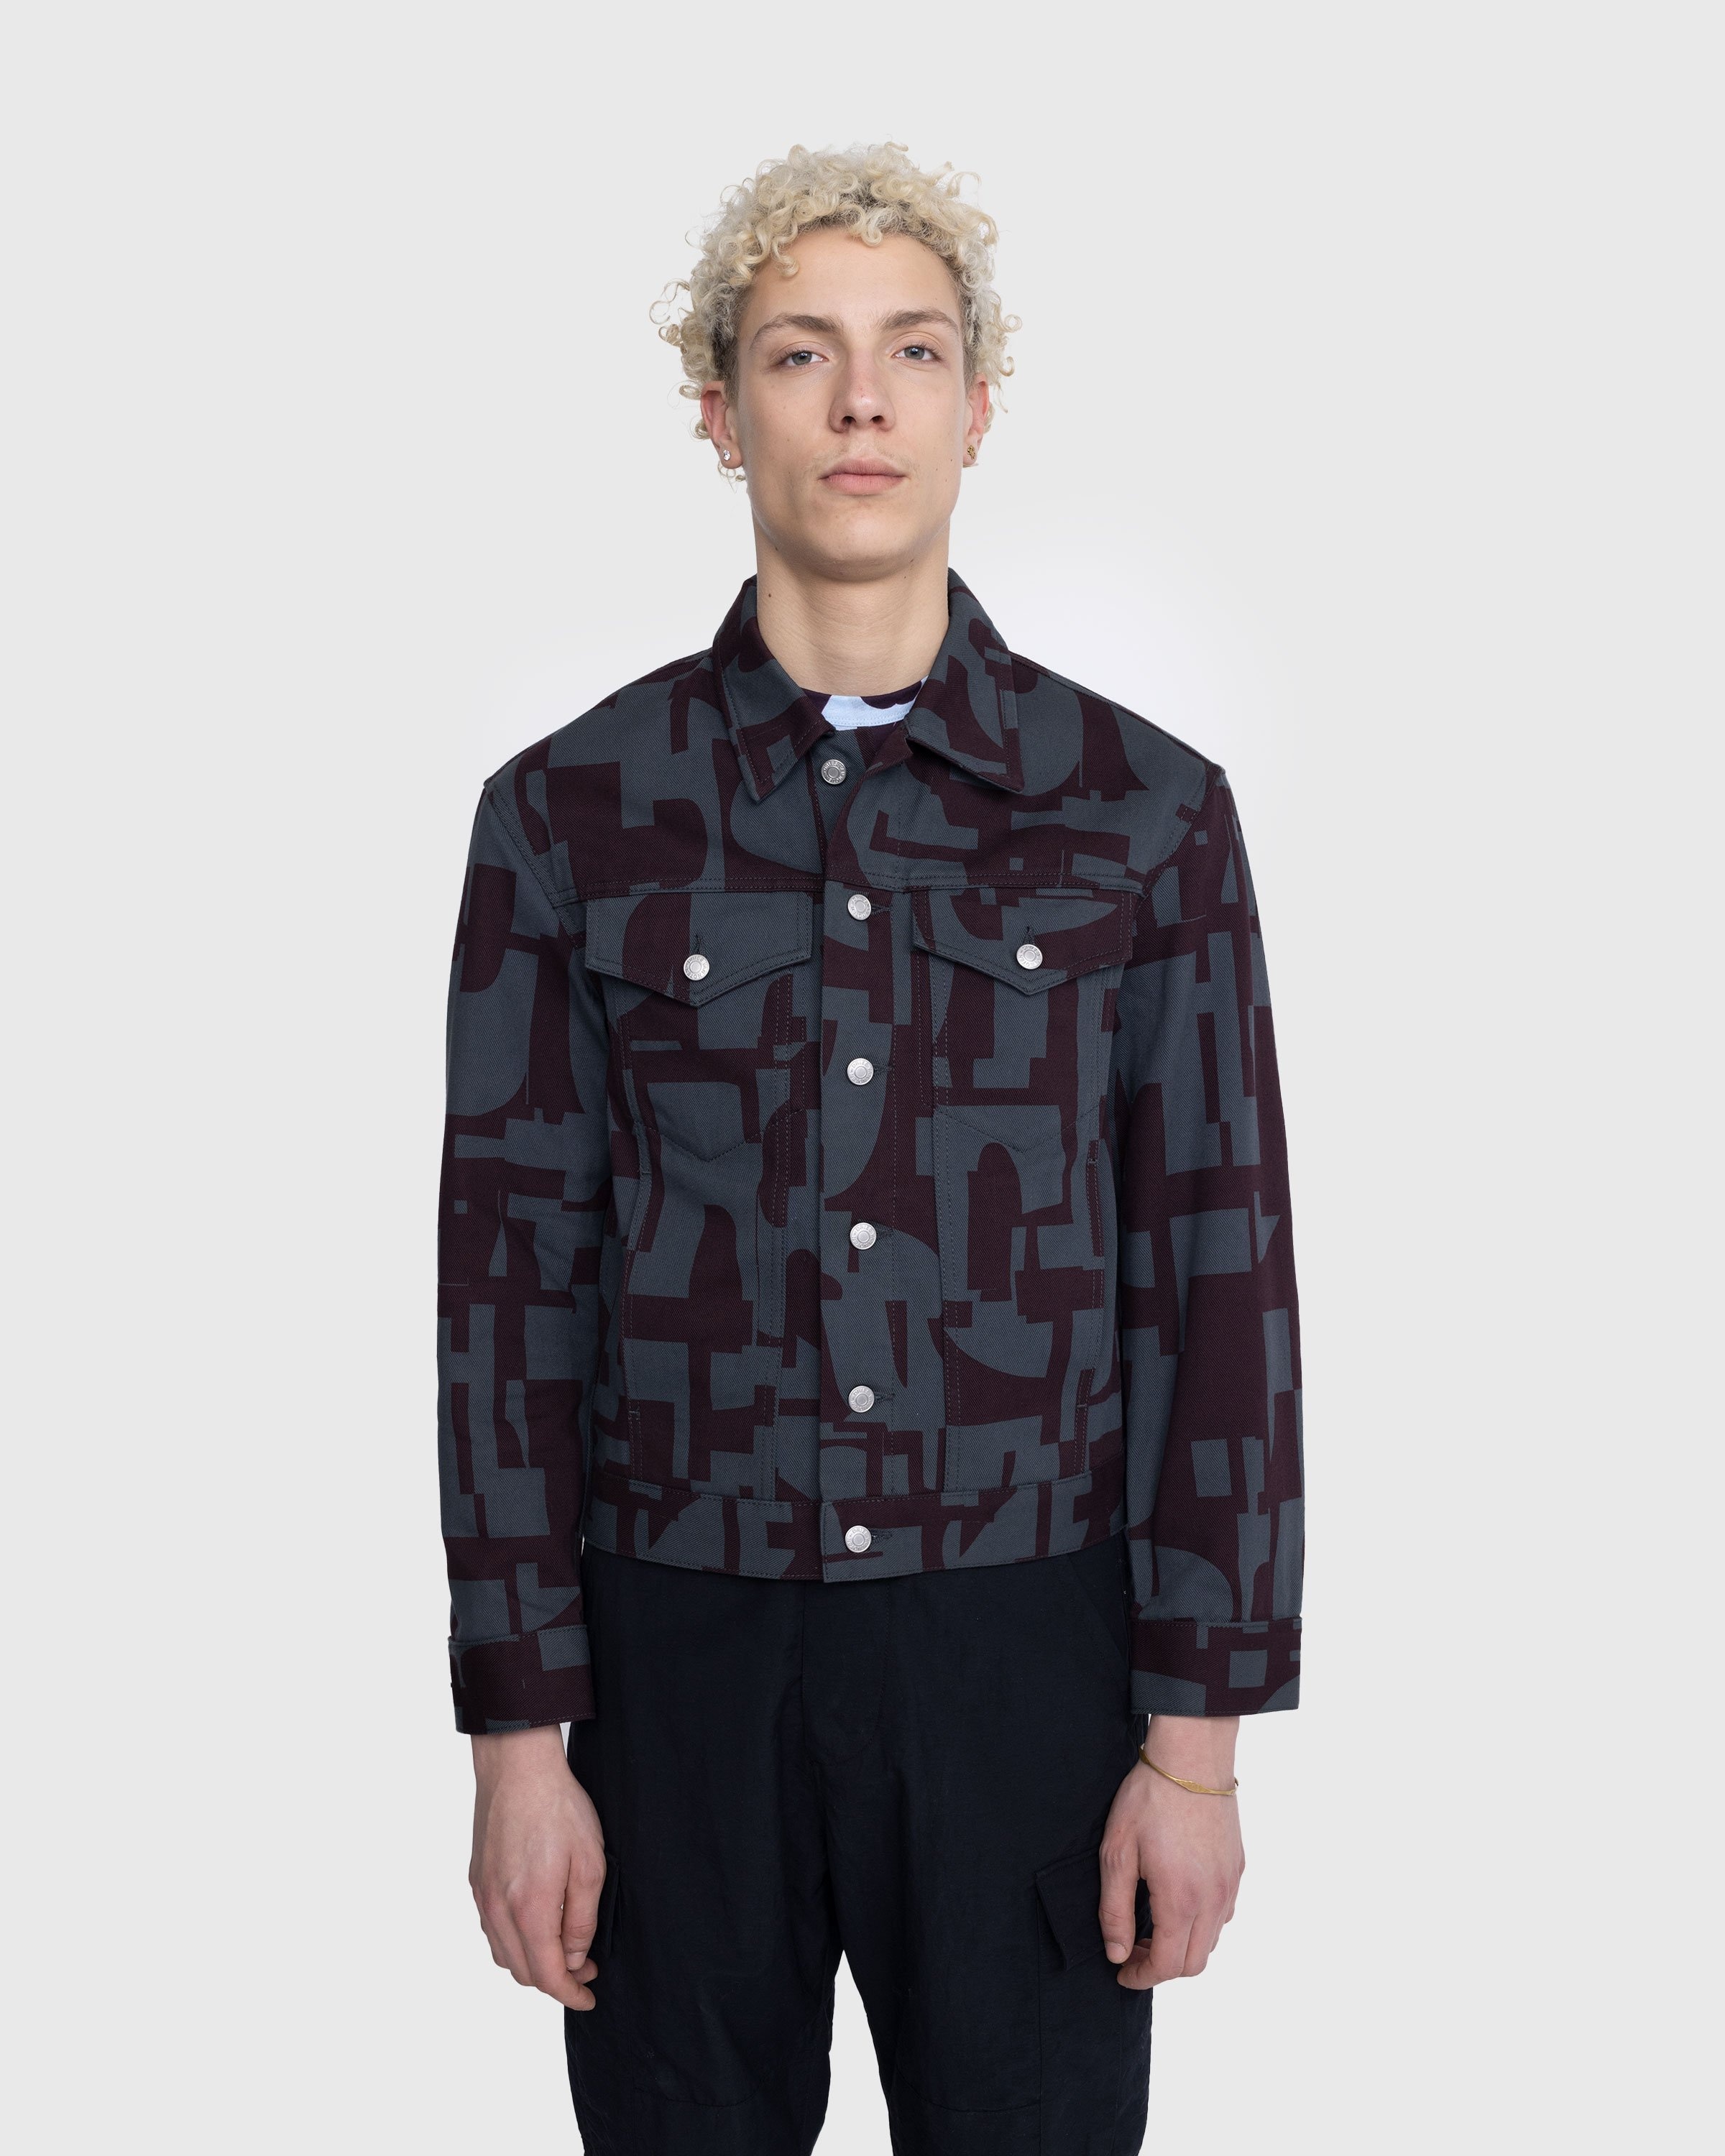 Jackets & Coats, Custom Louis Vuitton Camouflage Denim Jacket